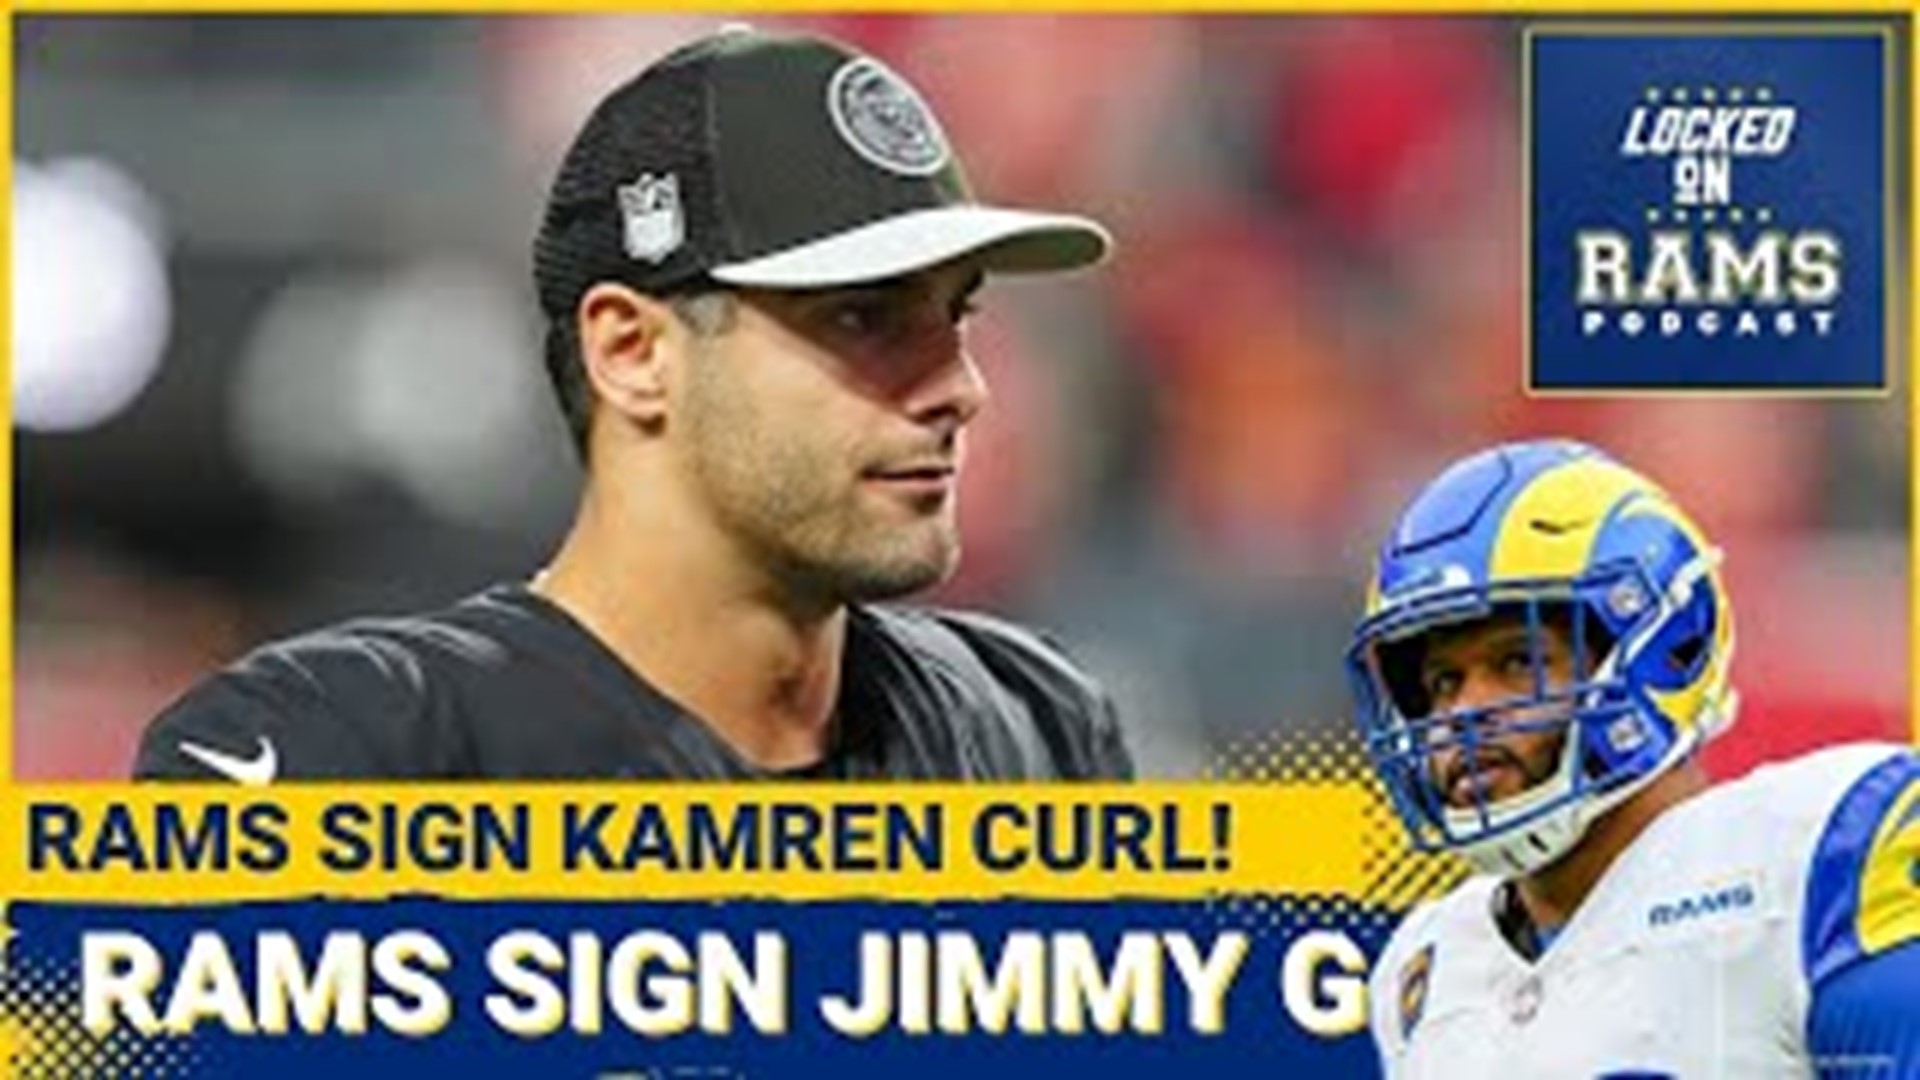 Rams Sign Jimmy Garoppolo, Kamren Curl, Will Aaron Donald Unretire, McVay Reveals When He Heard News.